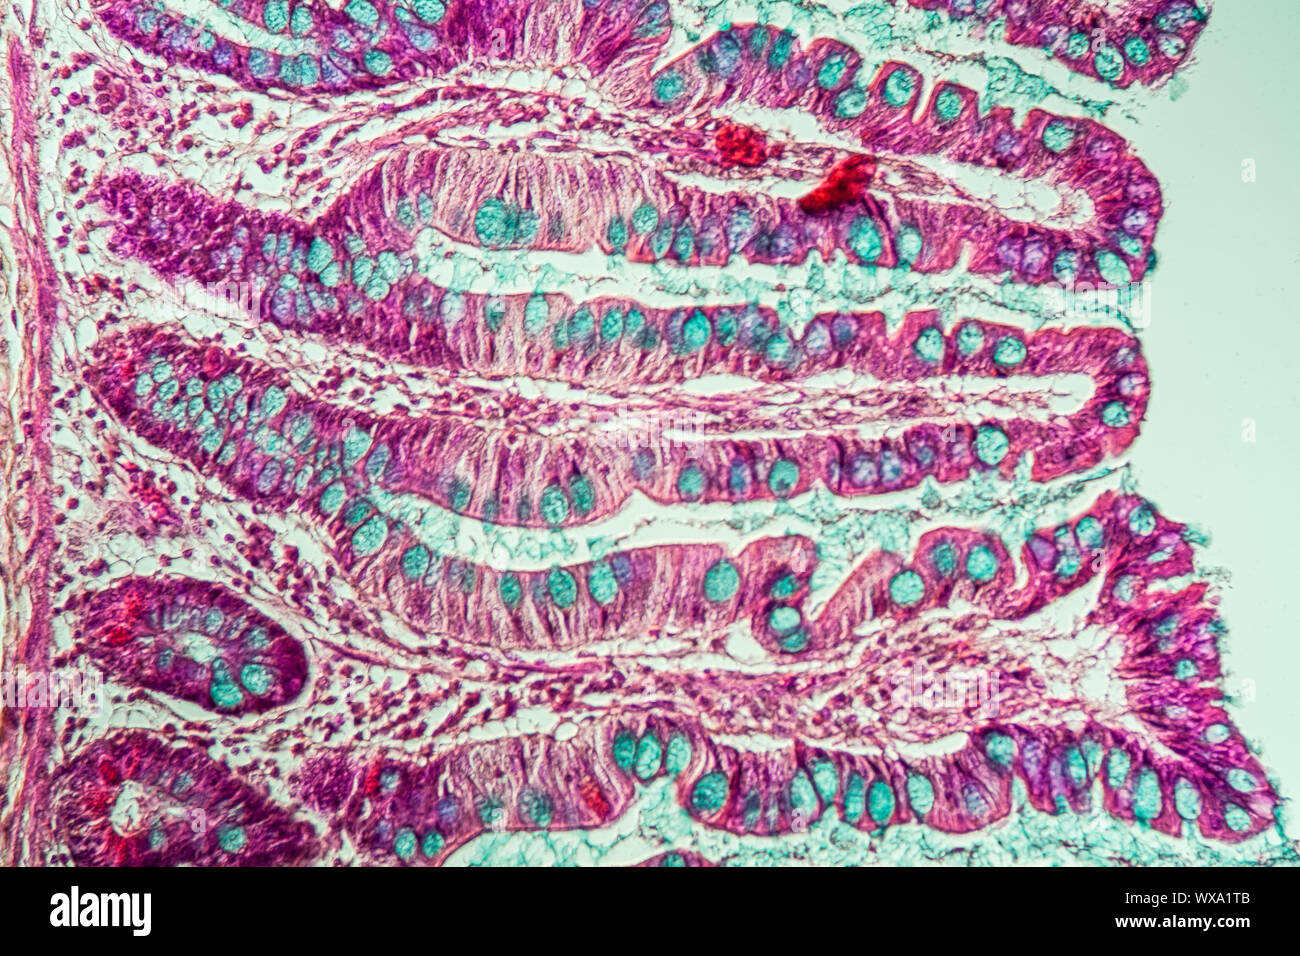 Small intestine with intestinal villi under the microscope 200x Stock Photo  - Alamy